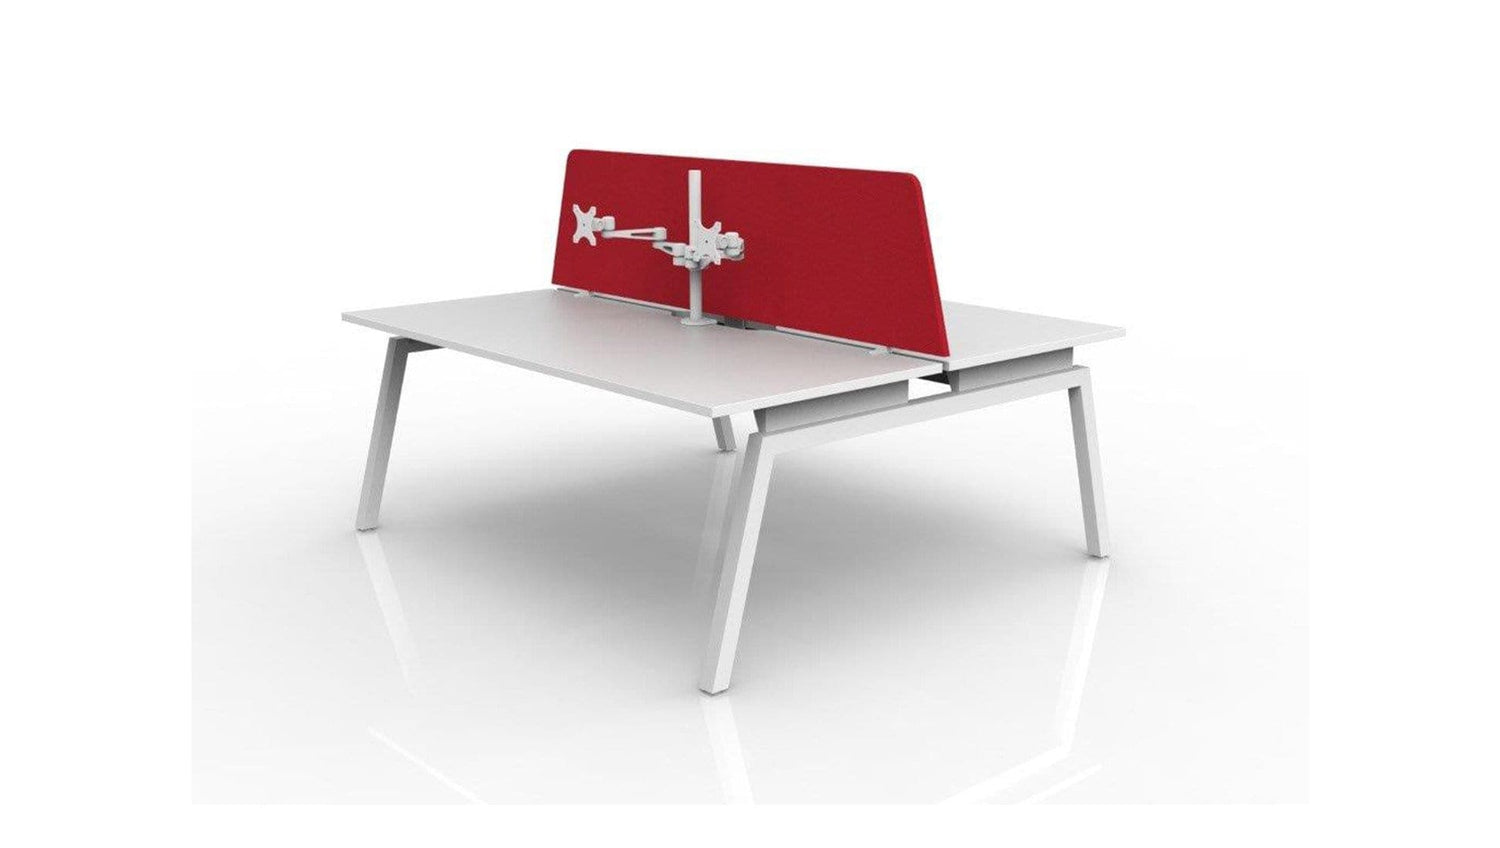 Desks Angled Balance Pod System